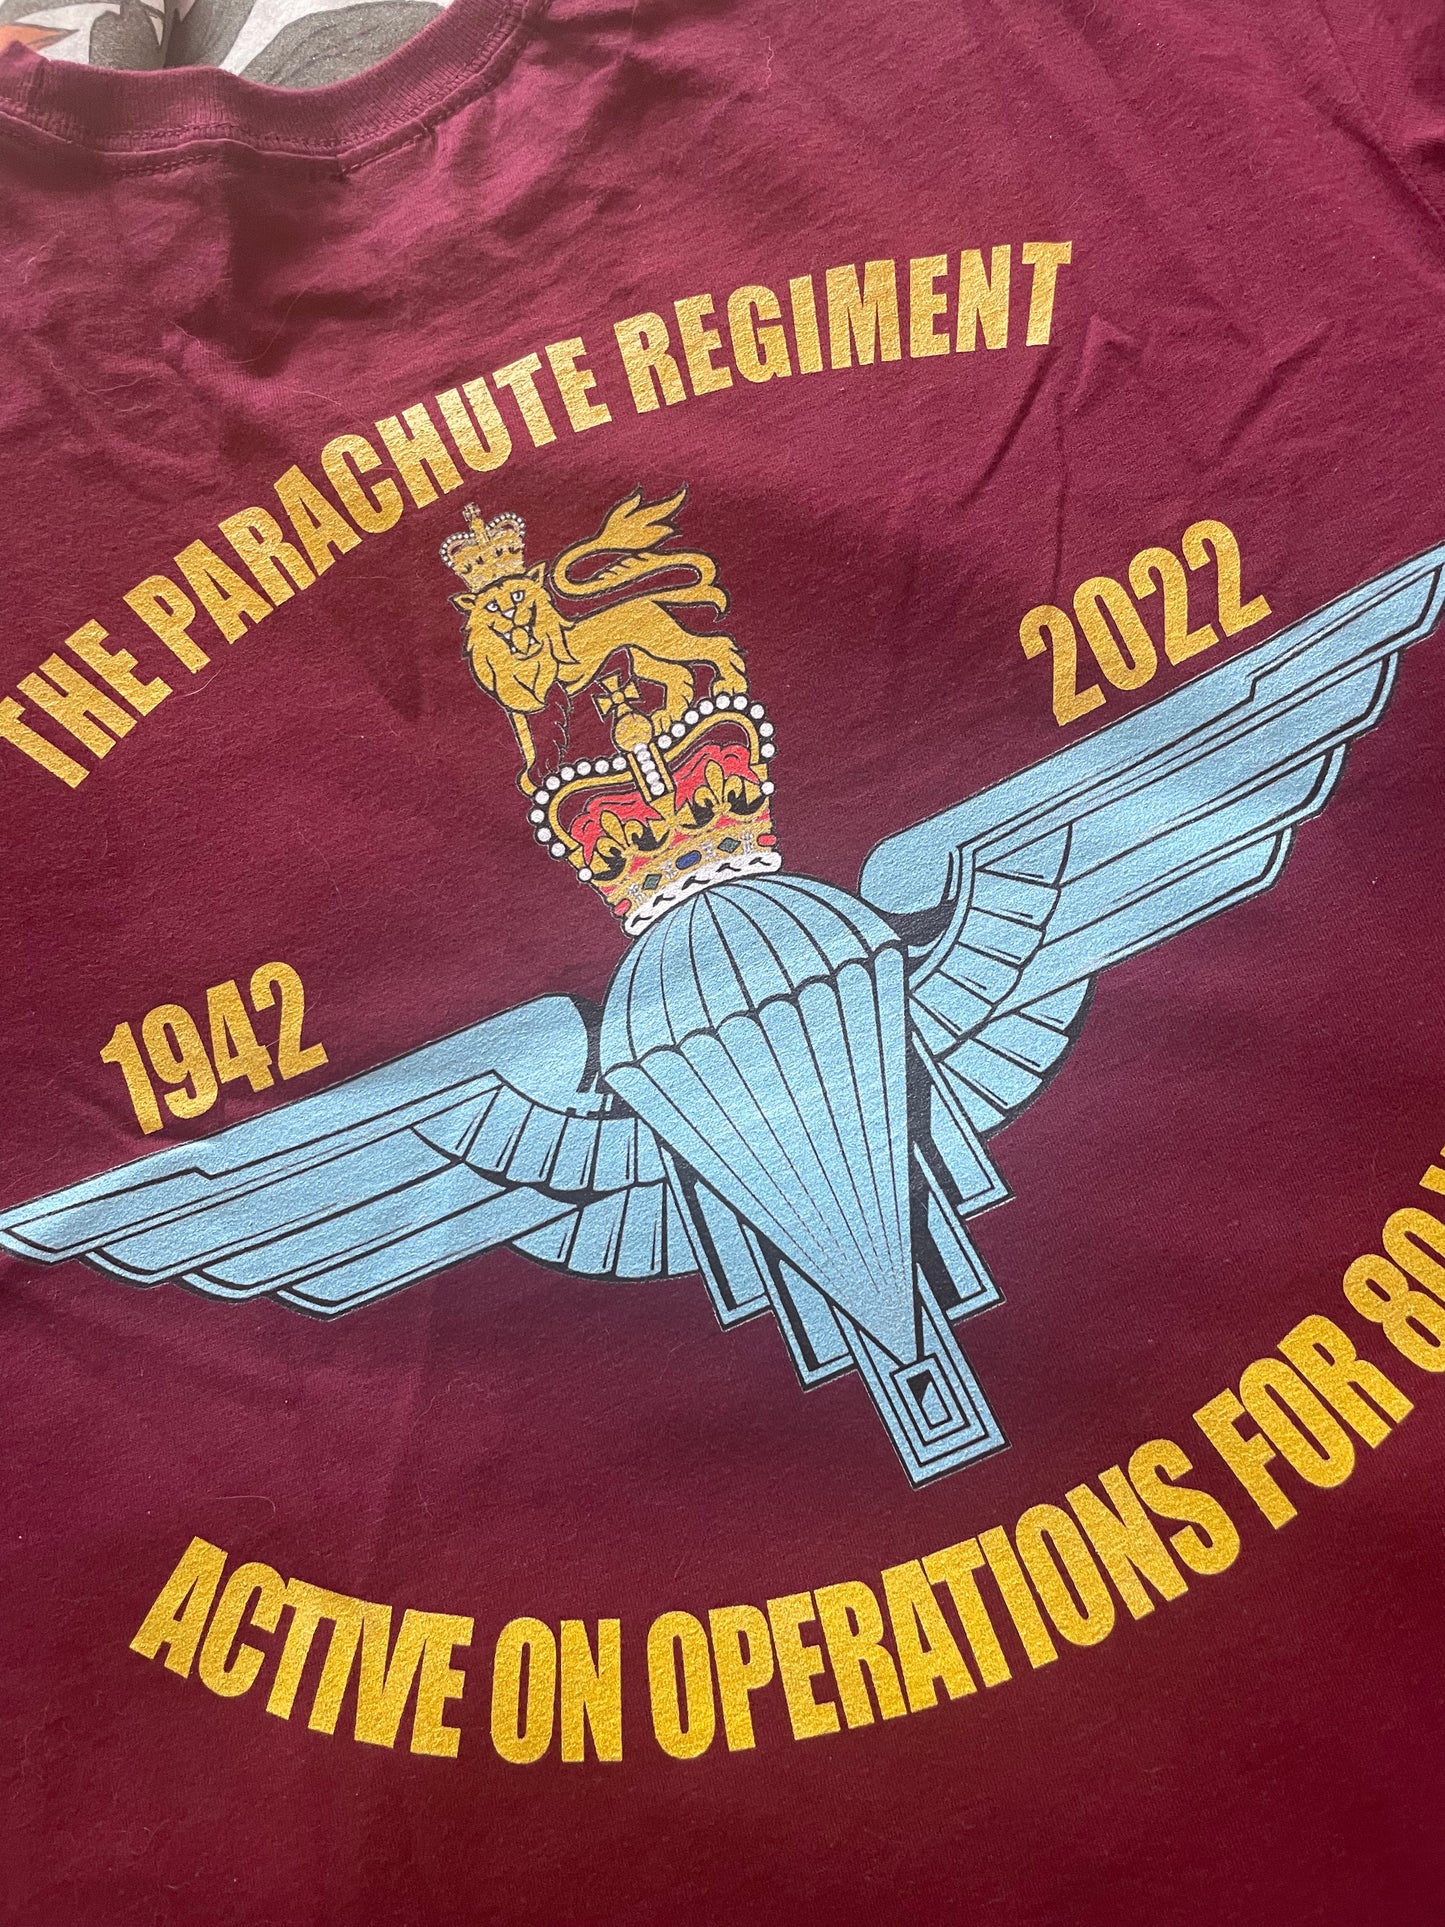 Parachute Regiment 80th anniversary commemorative T-Shirt